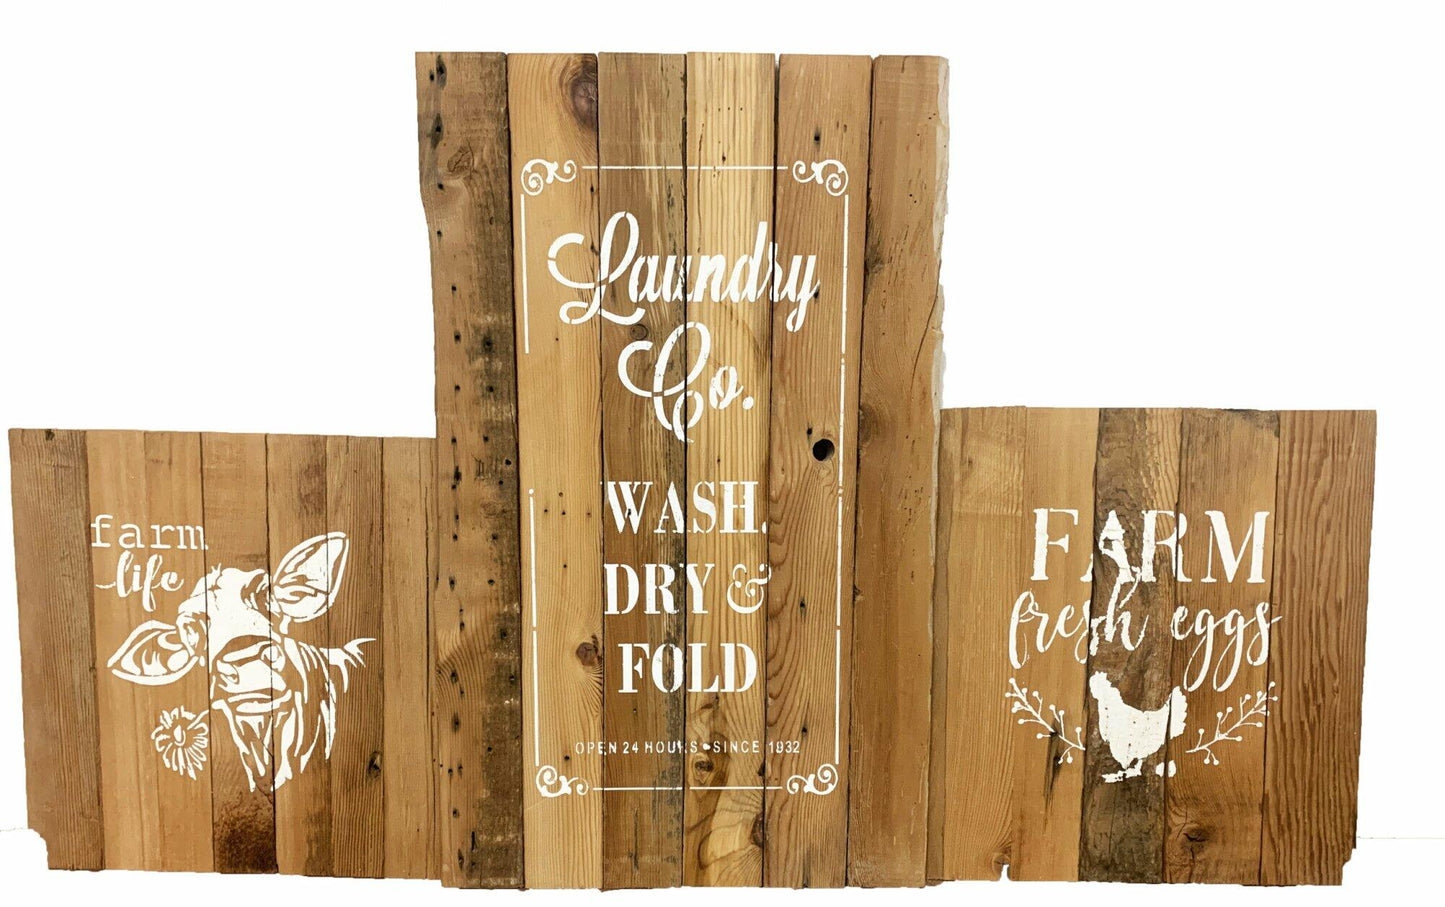 "Laundry & Co" Reclaimed Wood Farmhouse Wall Art Decor Sign